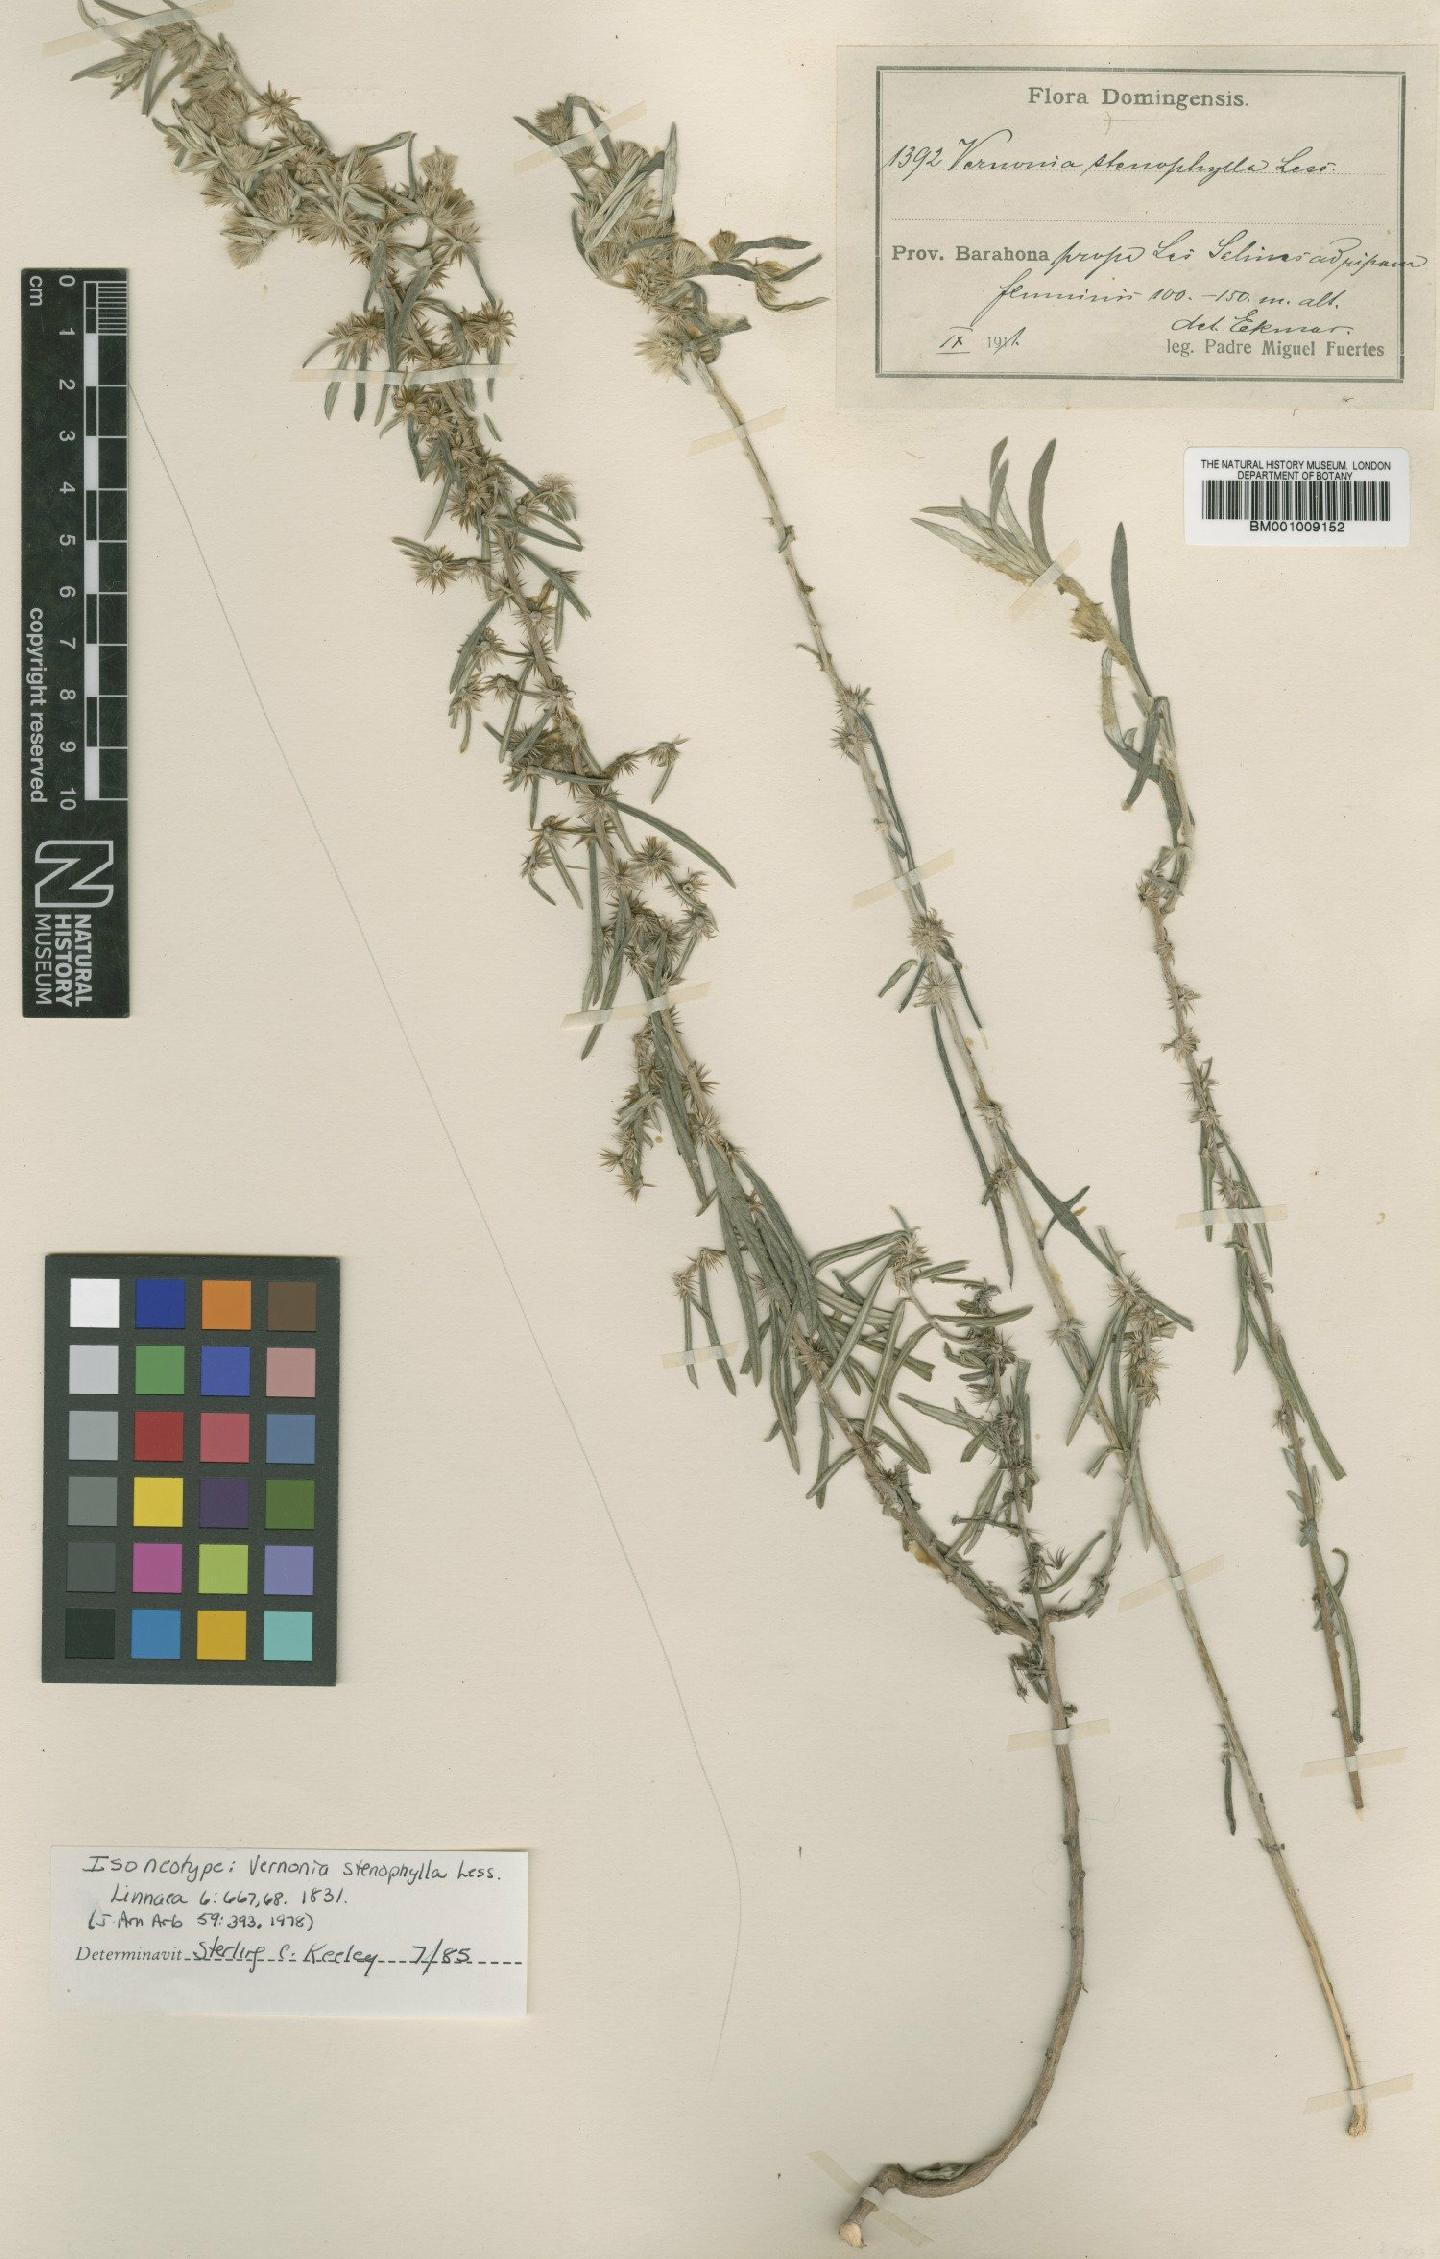 To NHMUK collection (Vernonia stenophylla Less.; Isoneotype; NHMUK:ecatalogue:556249)